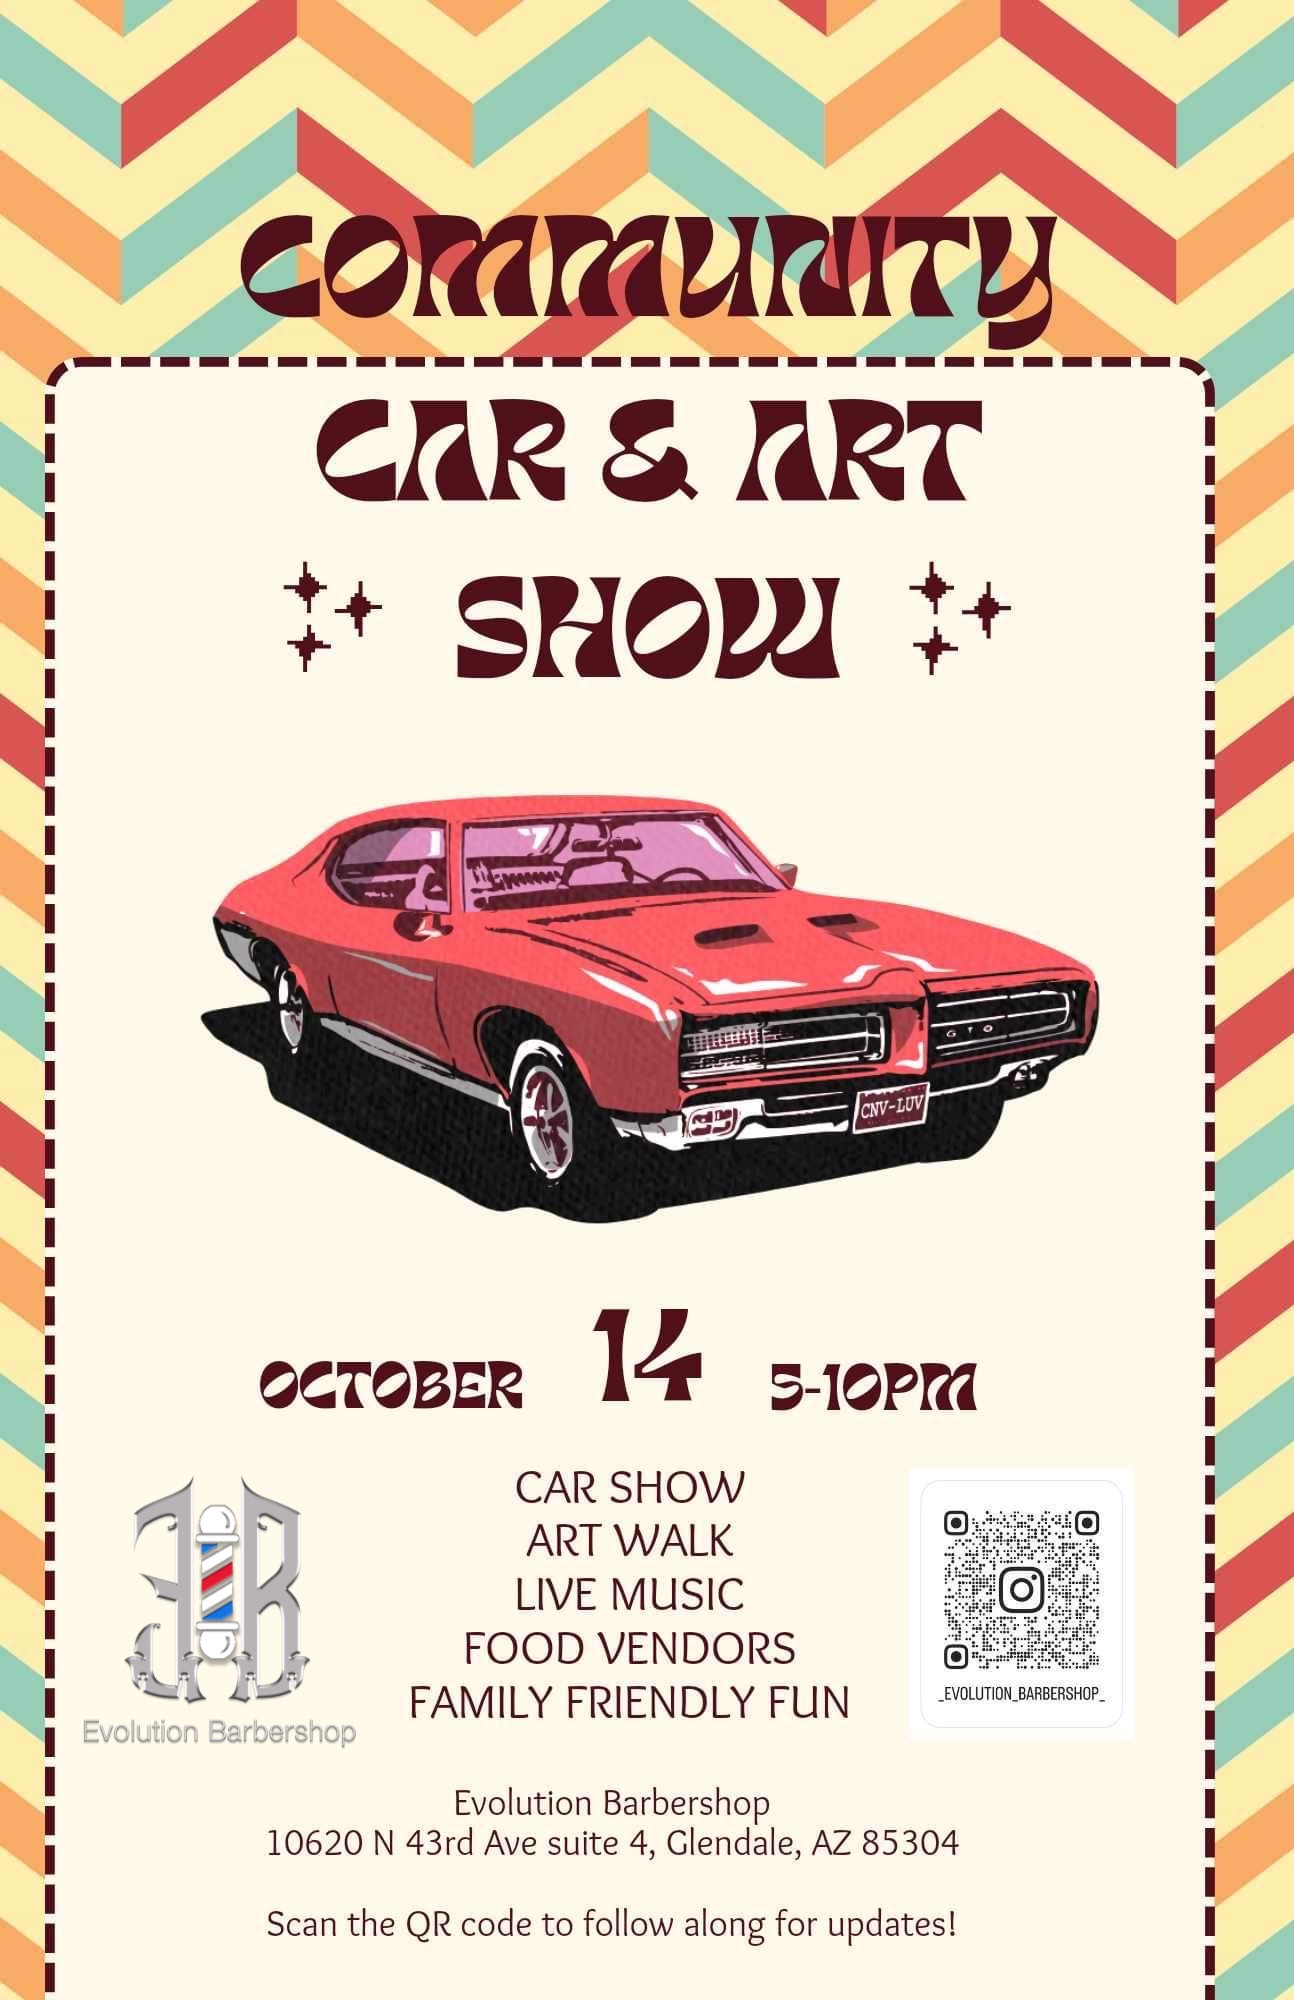 Community Car & Art Show